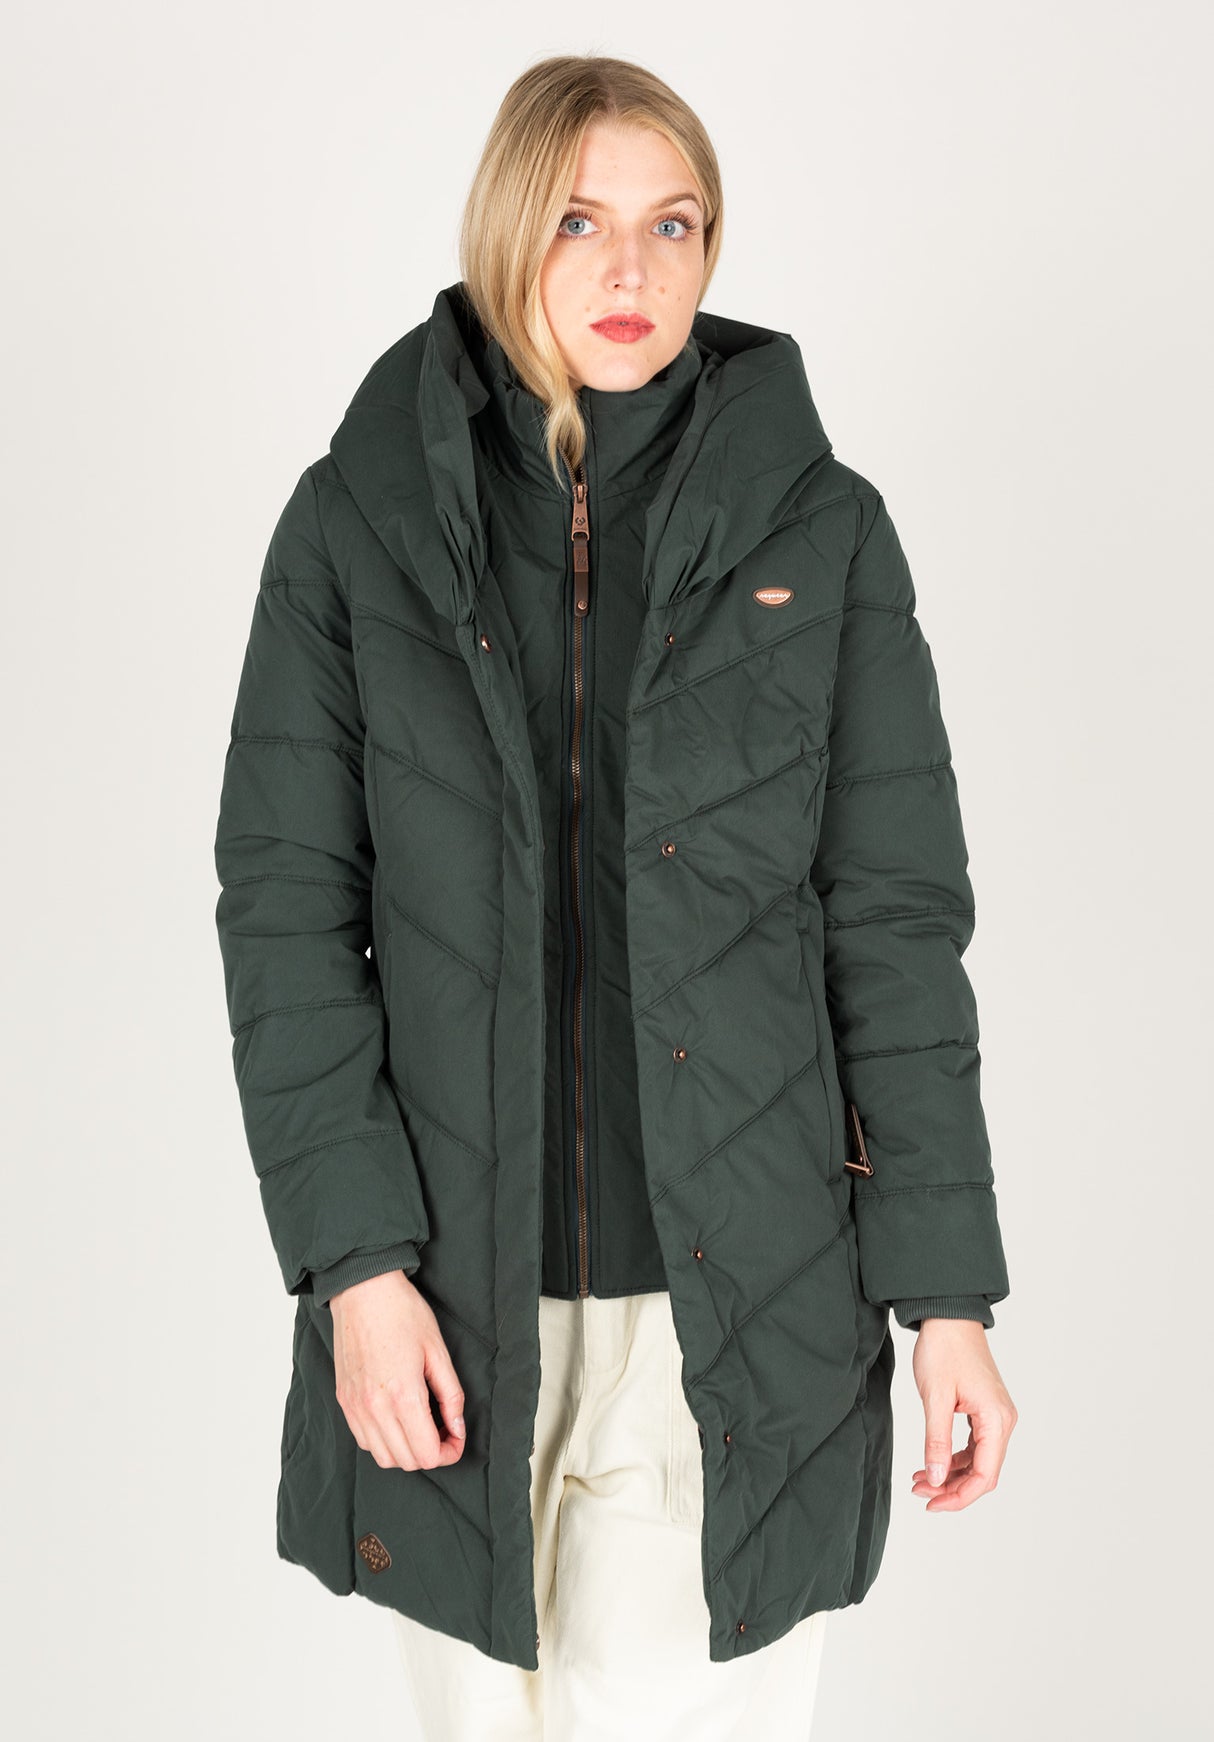 for – Natalka in TITUS darkgreen Ragwear Women 323 Winter Jackets